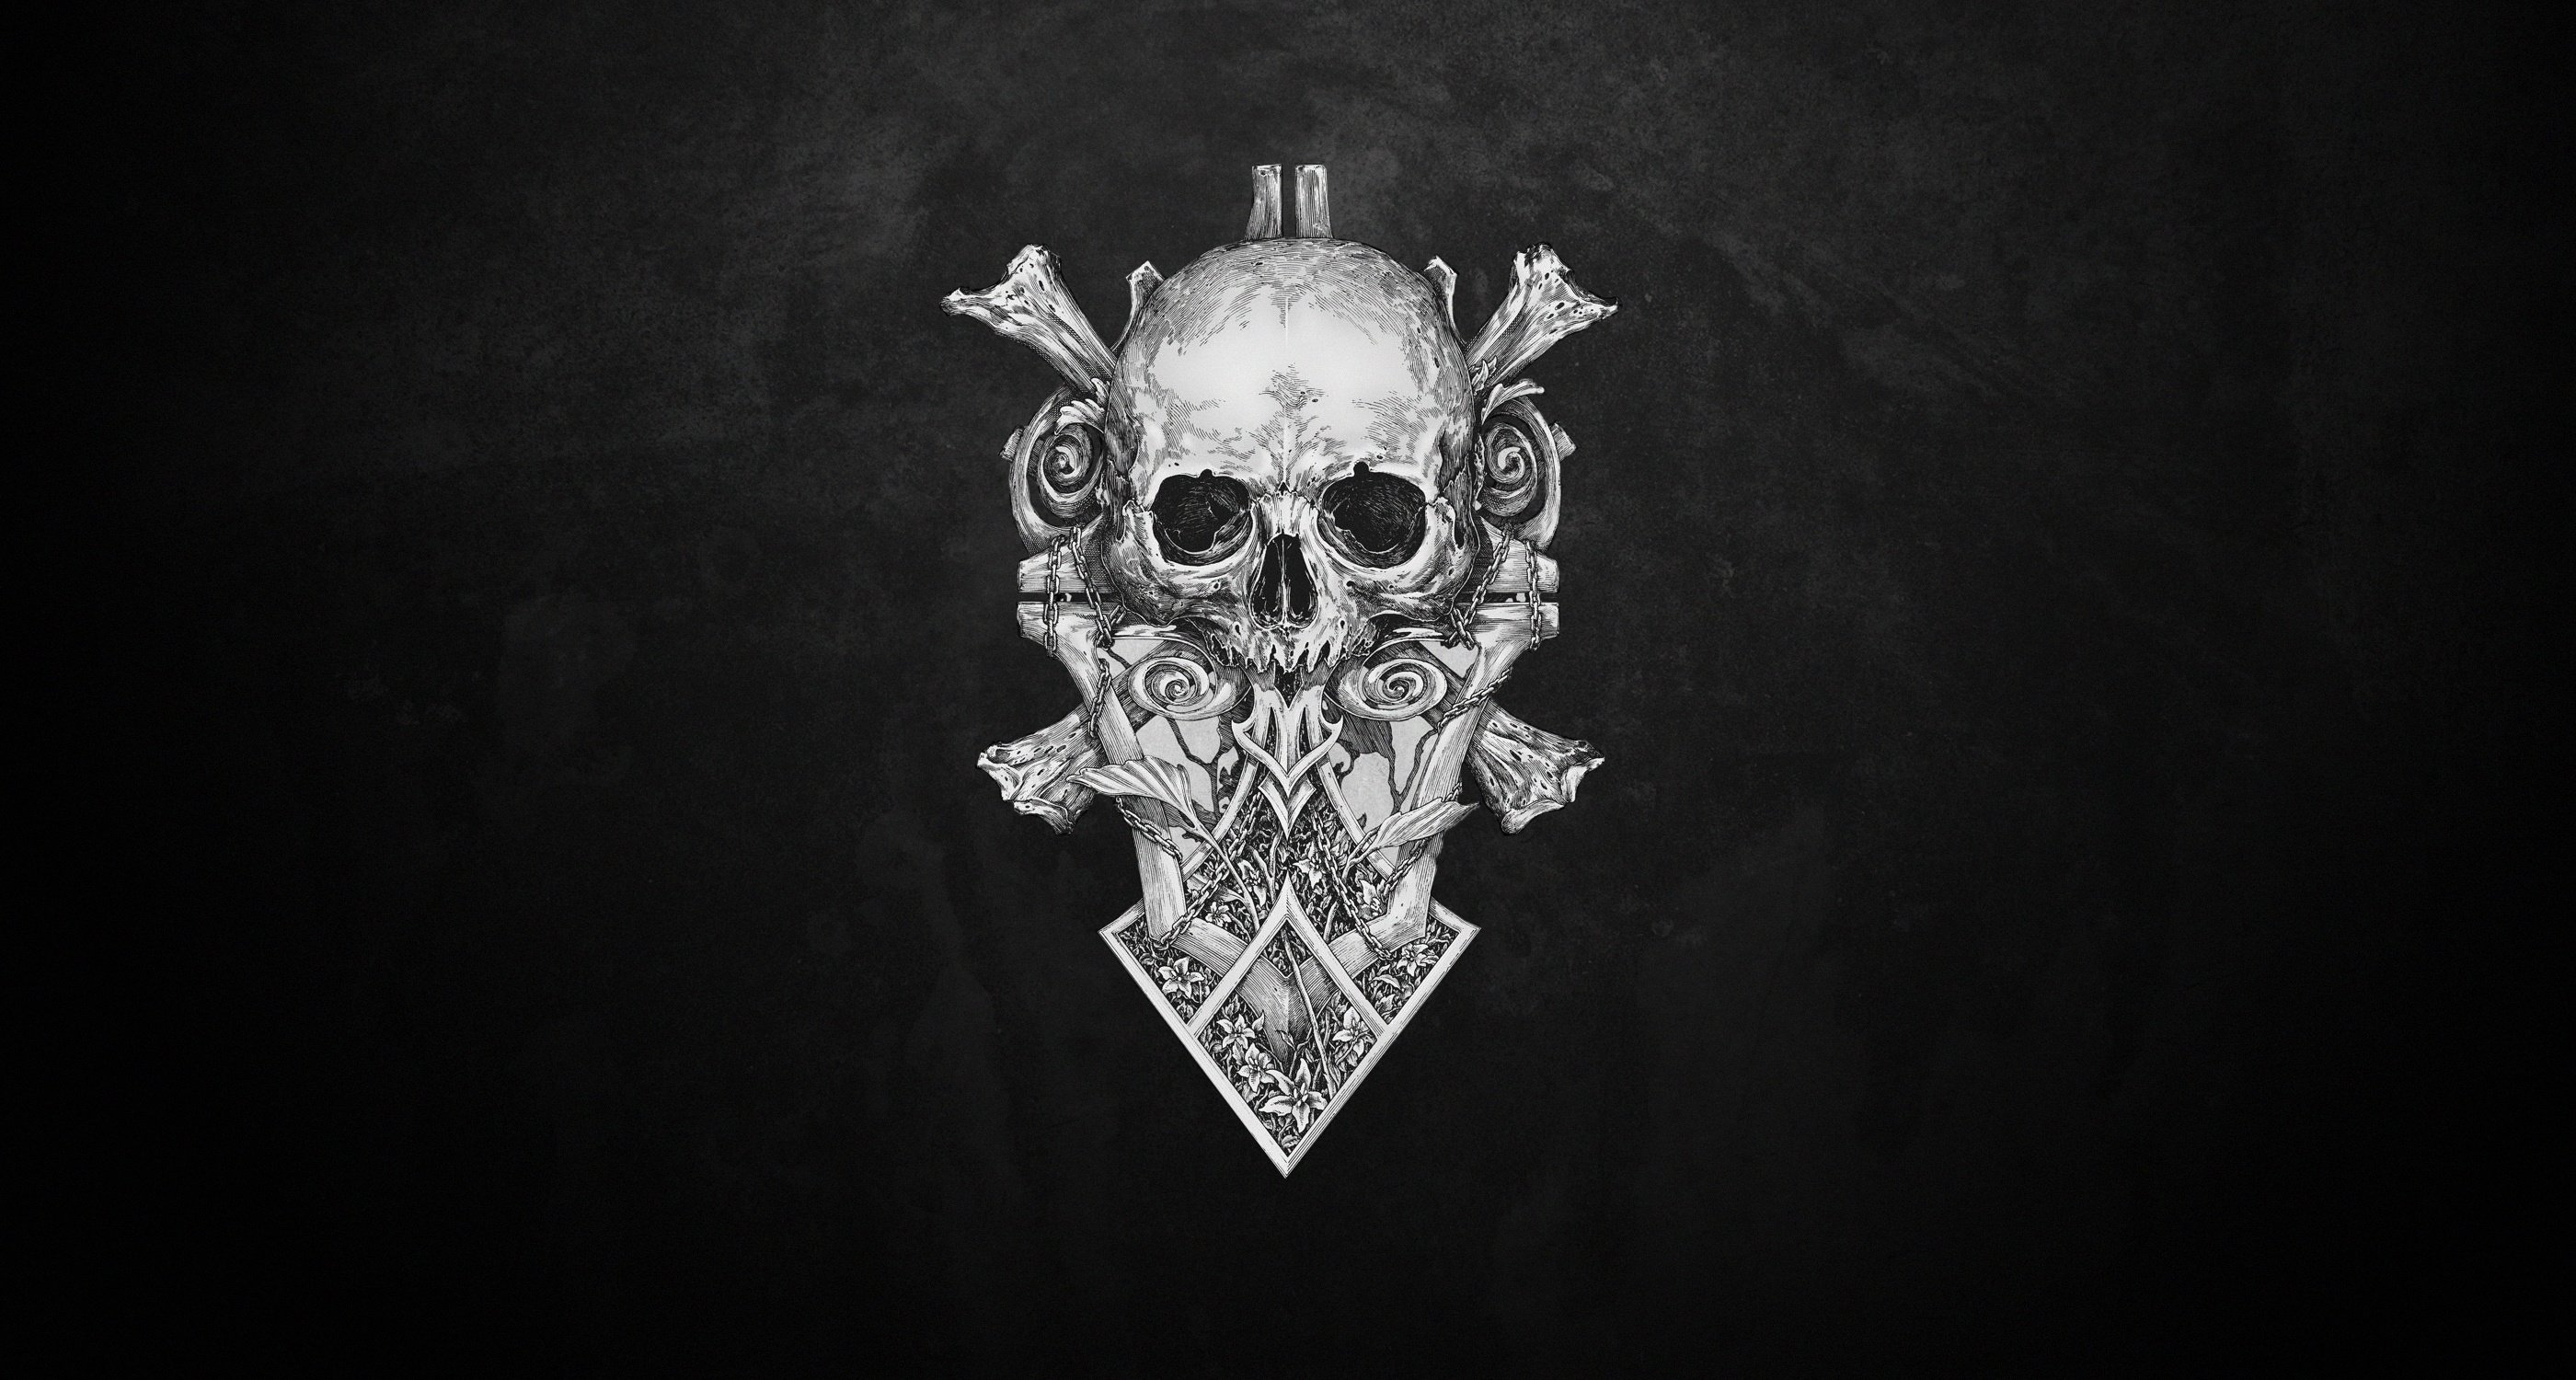 Skull Monochrome Dark Art, HD Artist, 4k Wallpaper, Image, Background, Photo and Picture